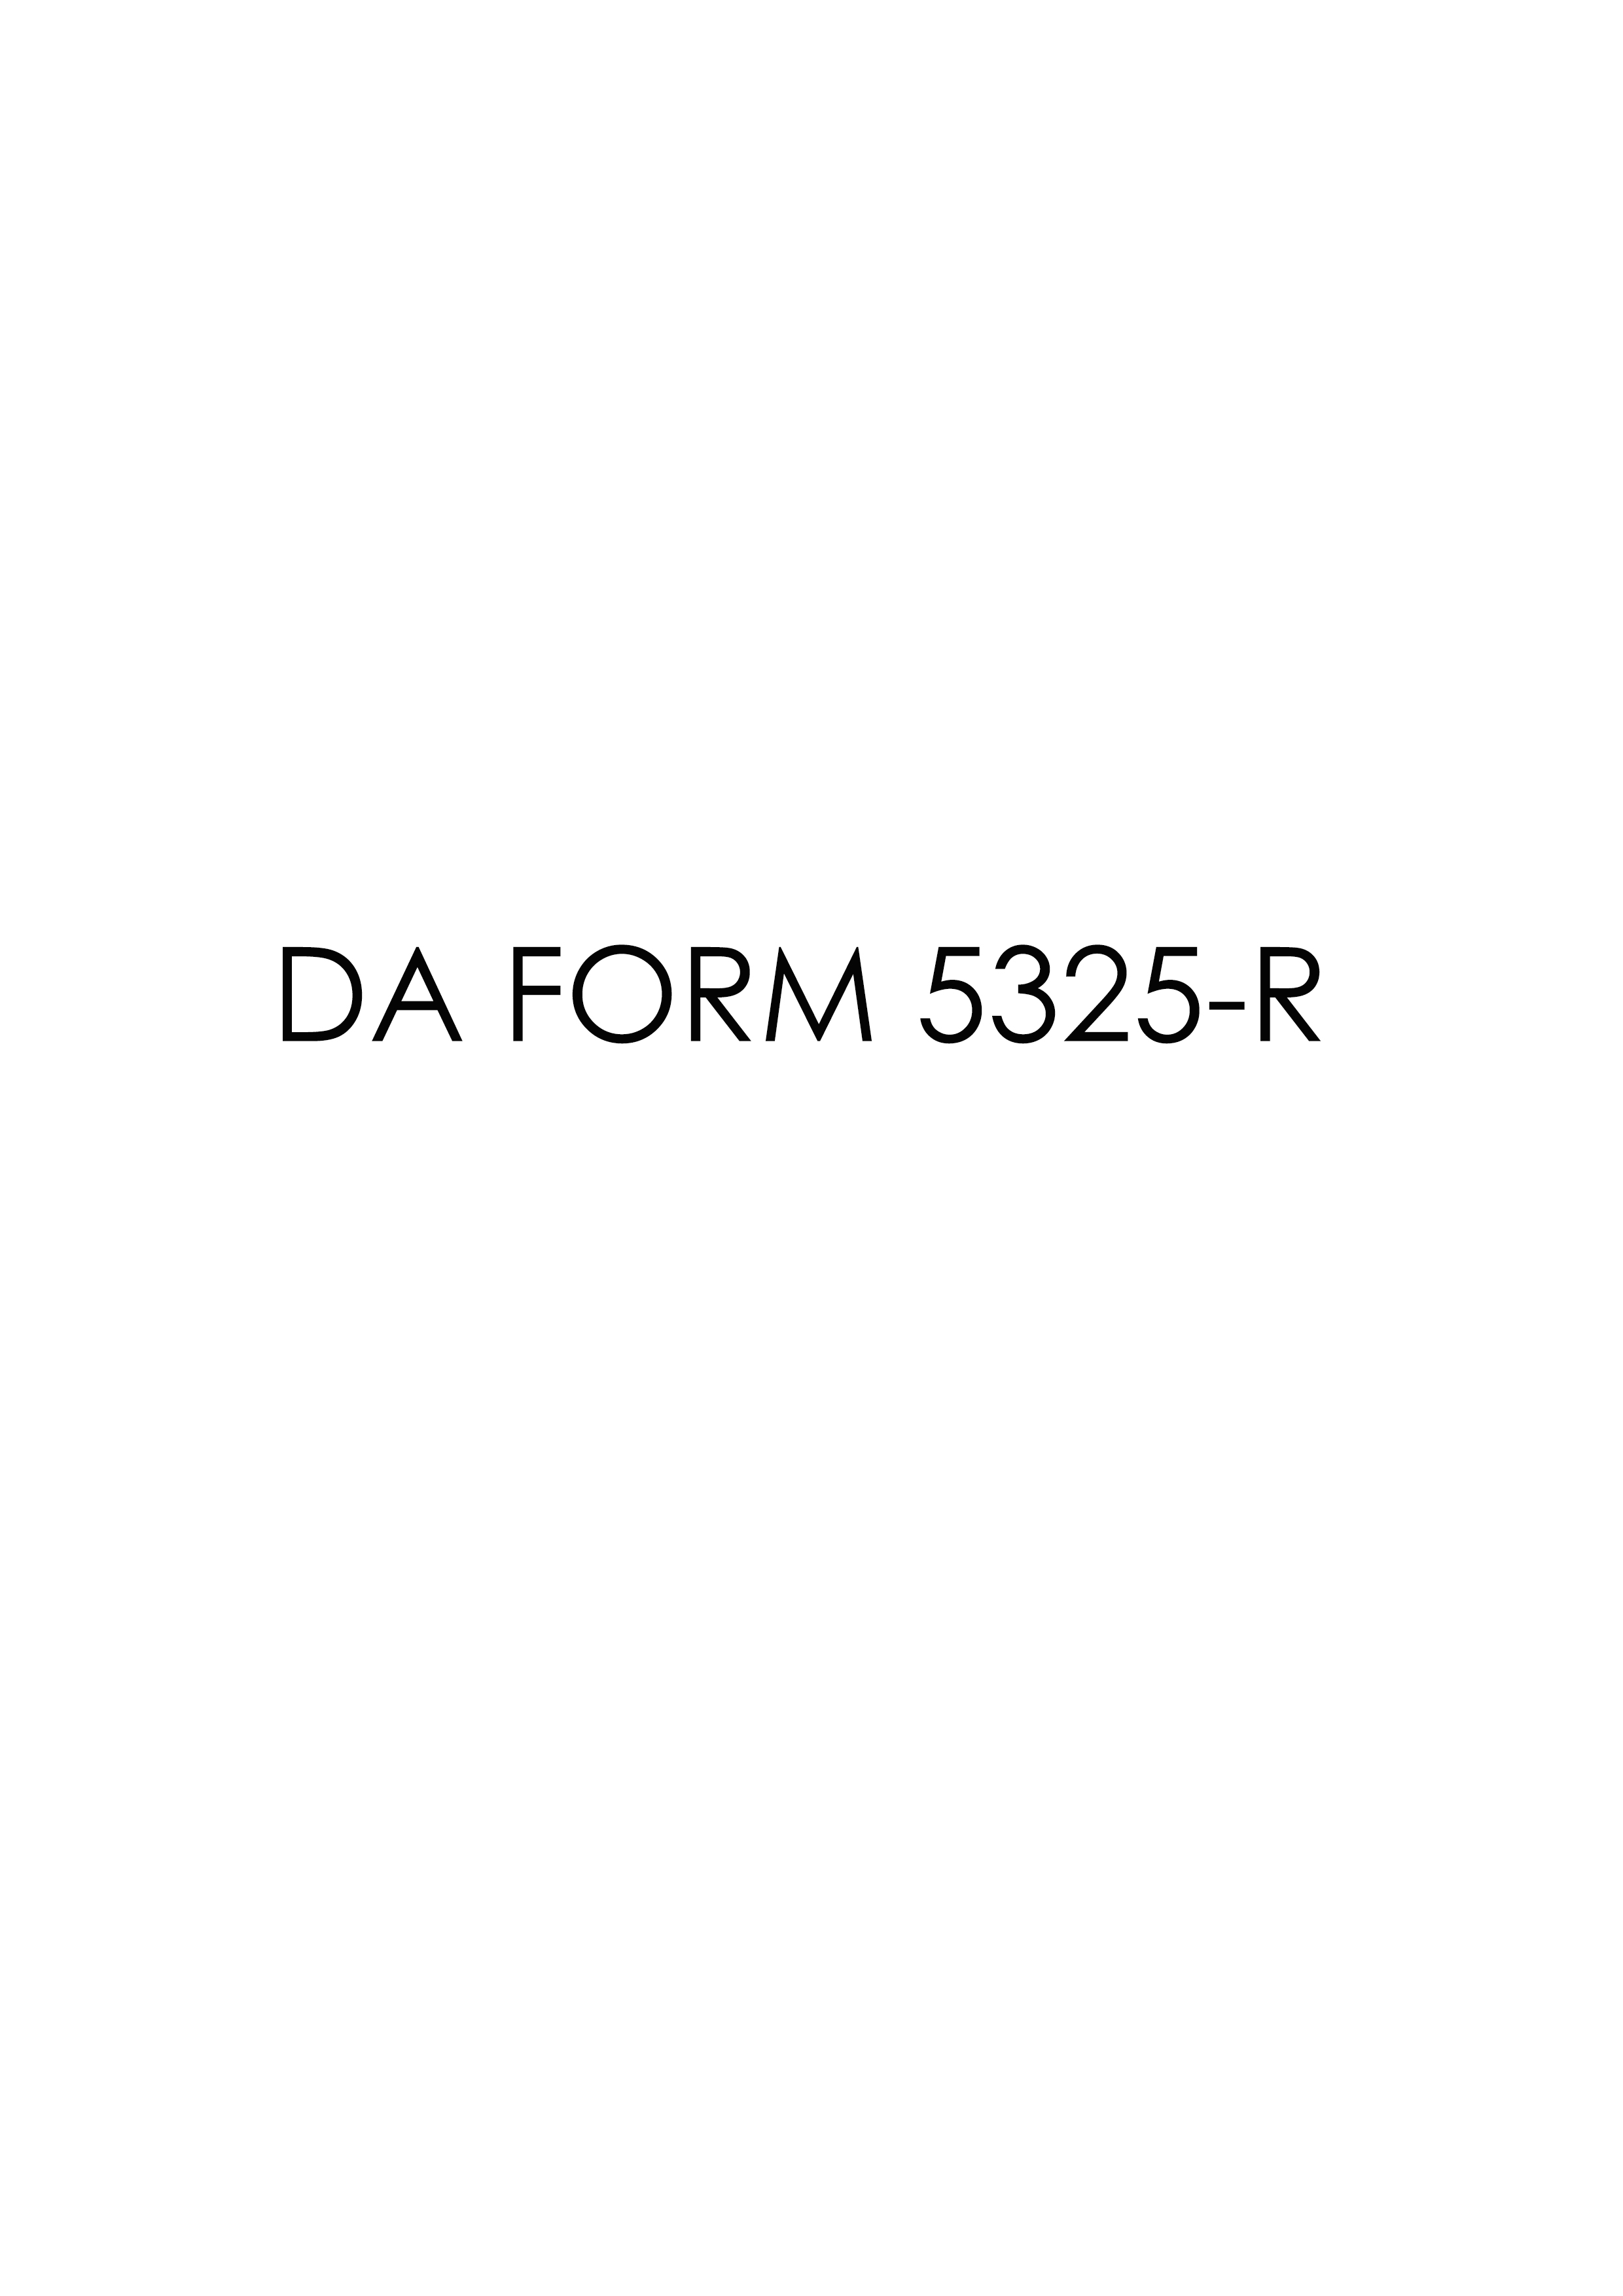 da Form 5325-R fillable